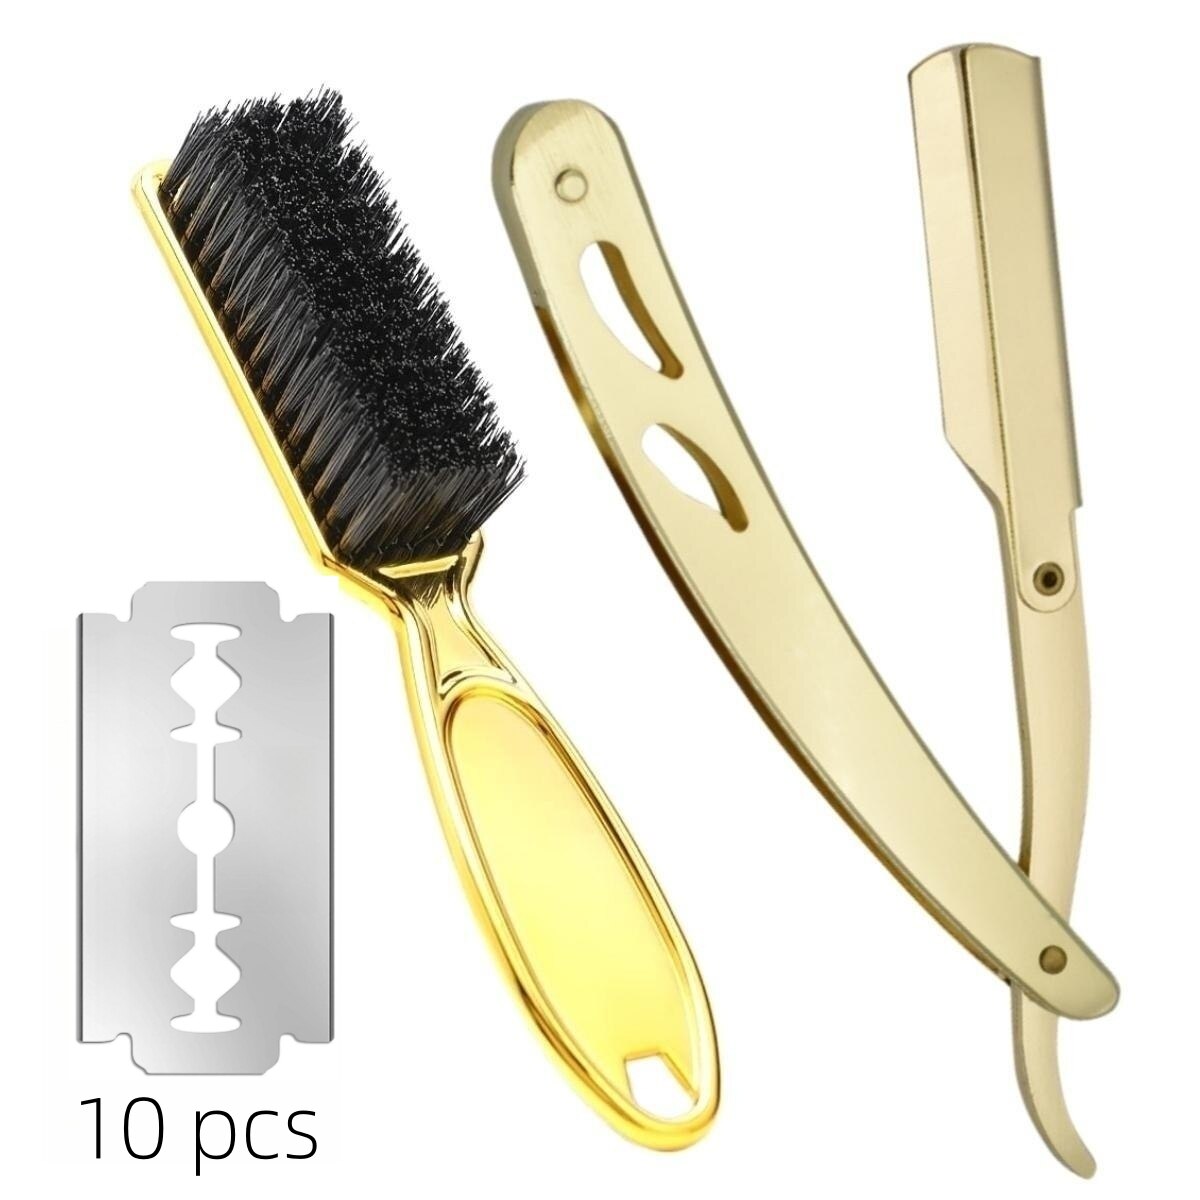 1 set 1 set Barber Manual Razor Beard Brush Set With 10 Blades Men